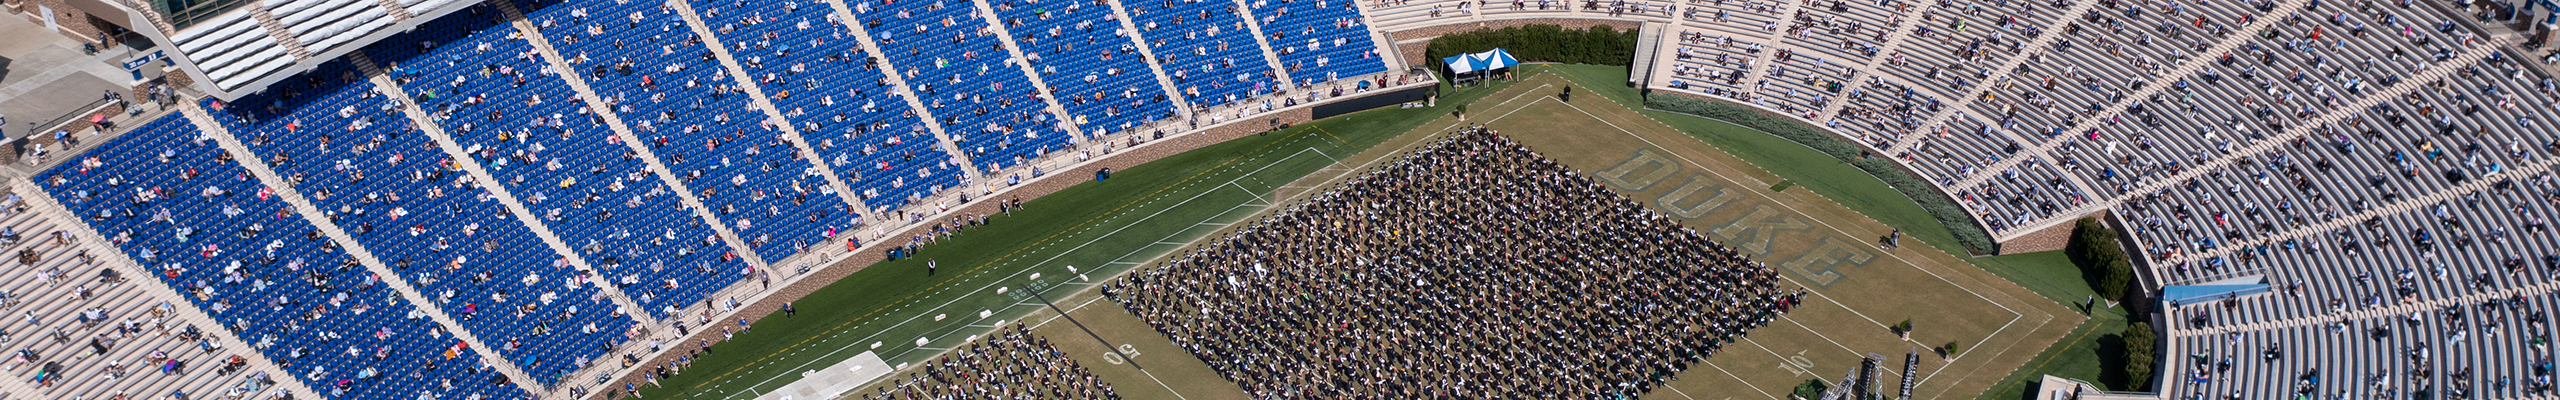 Aerial view of Wallace Wade Stadium at Duke University